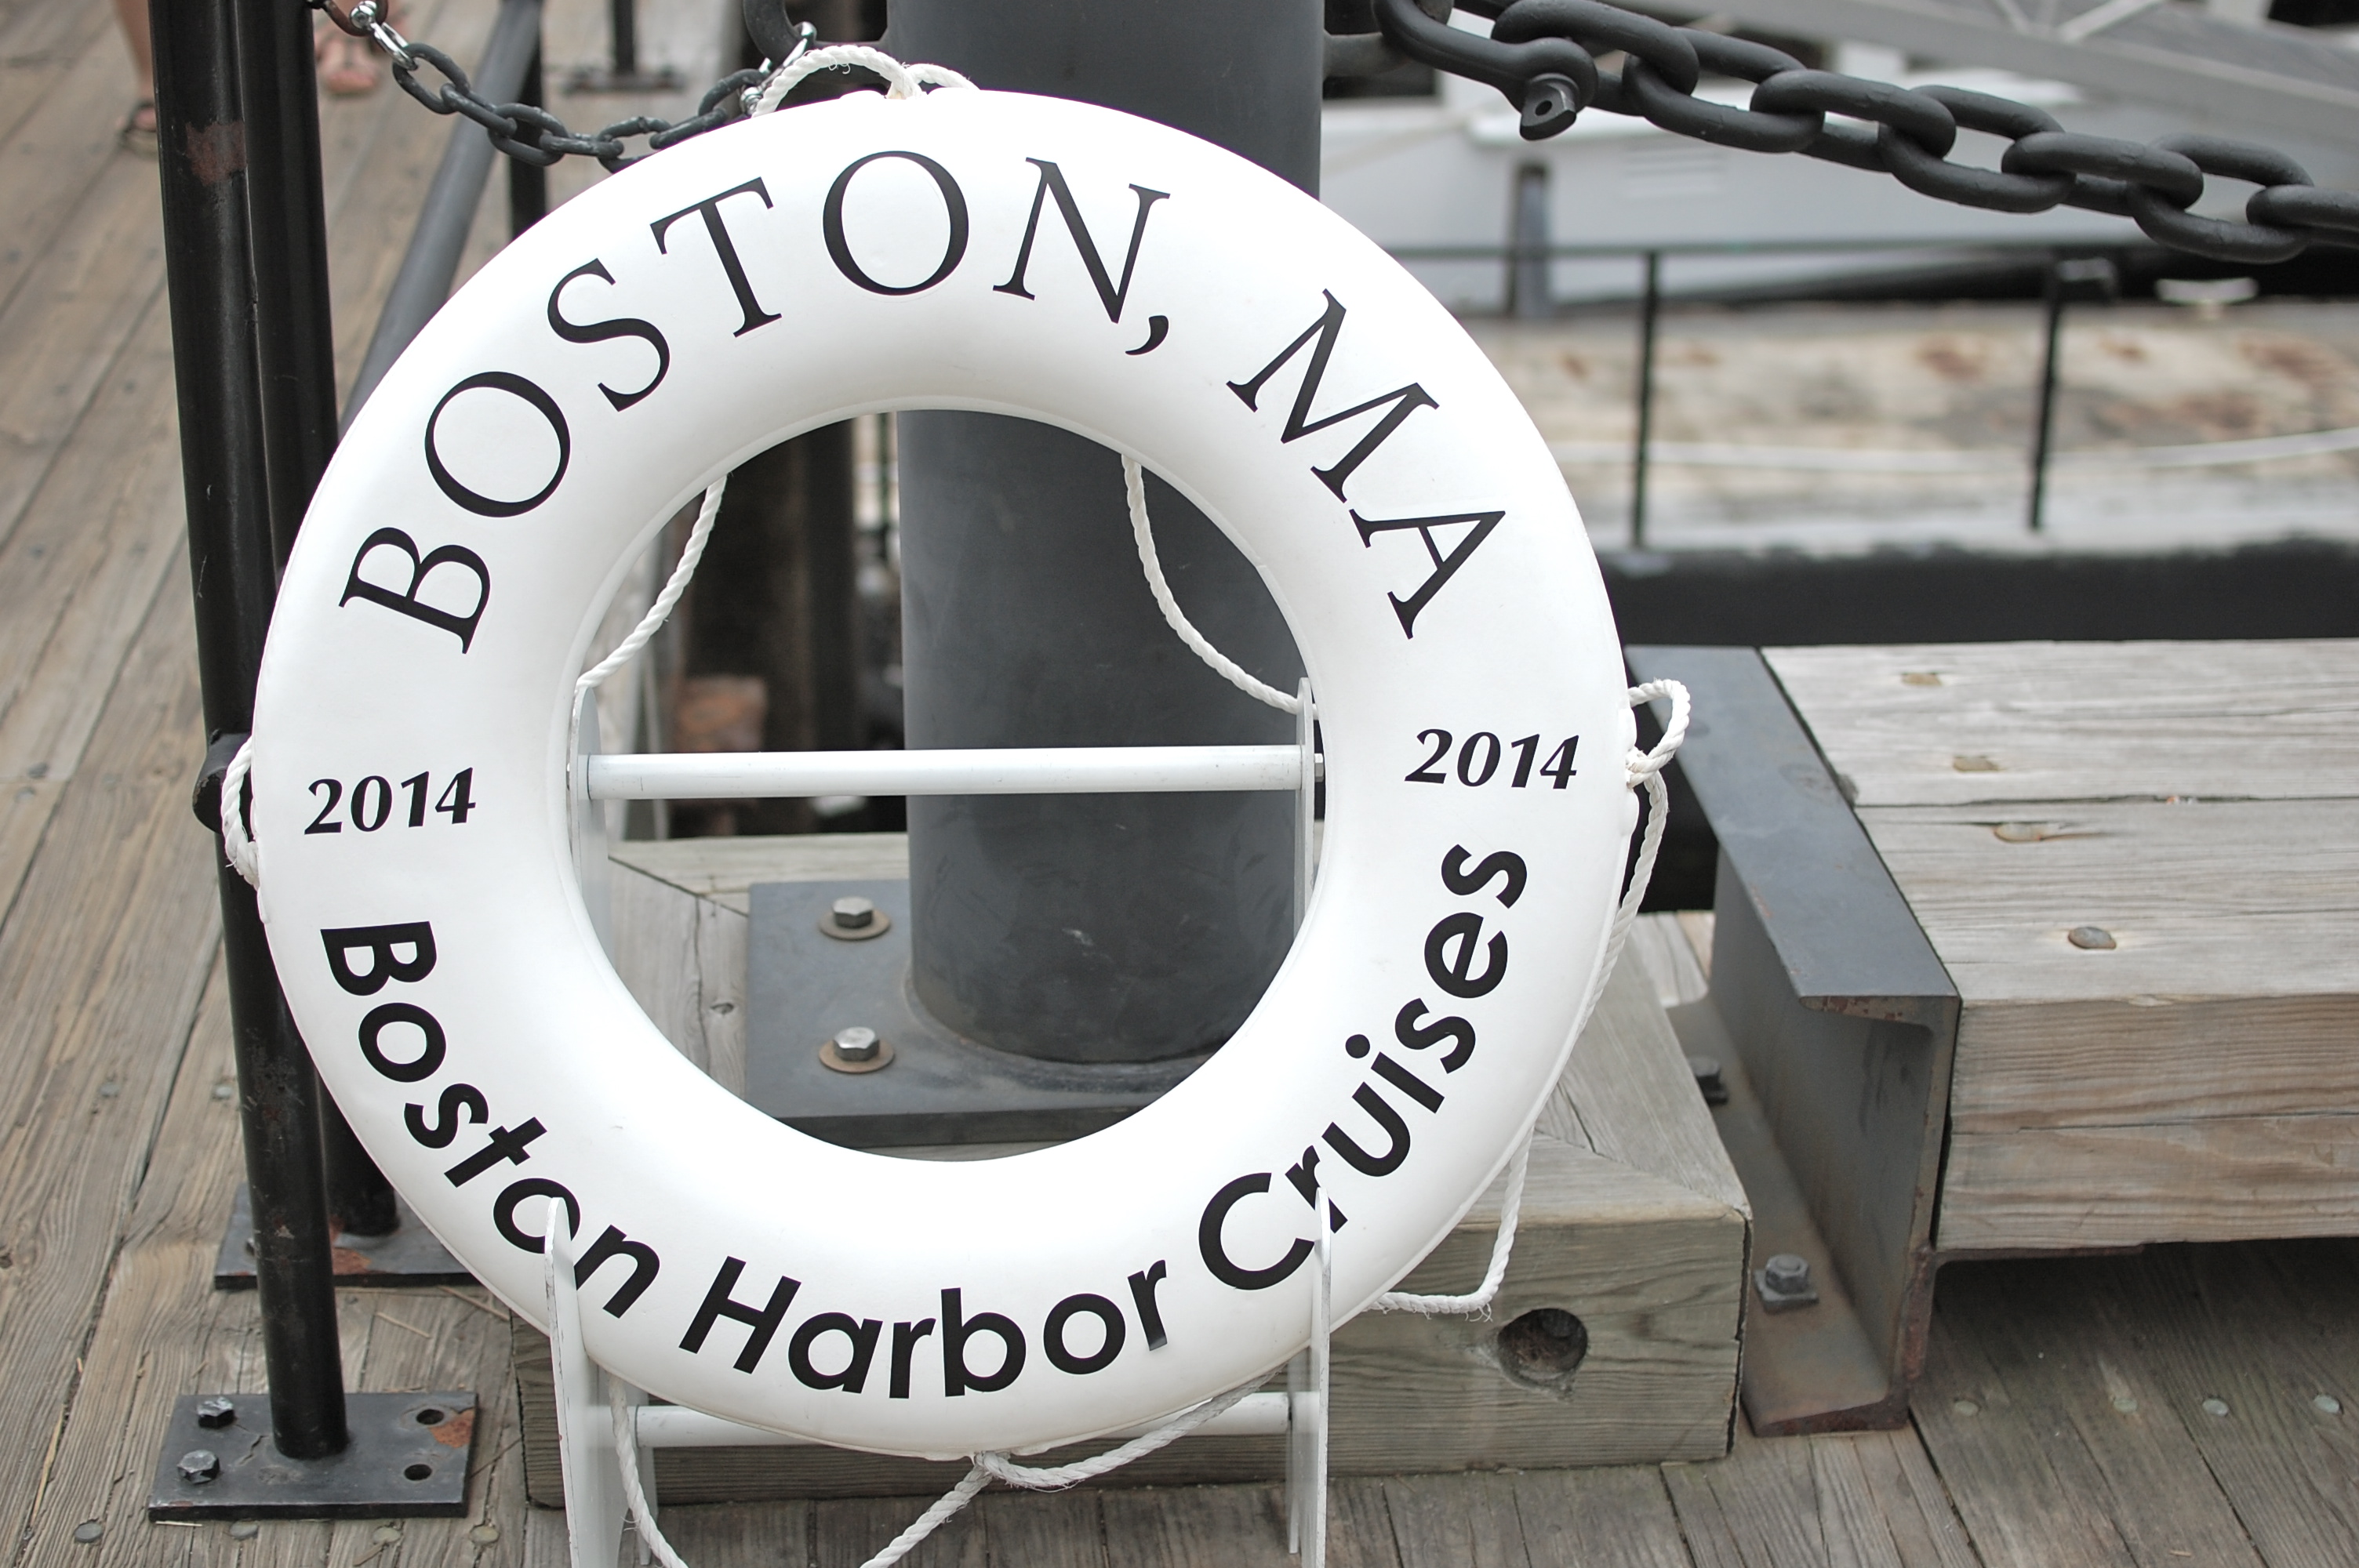 Boston Harbor Cruises Photography